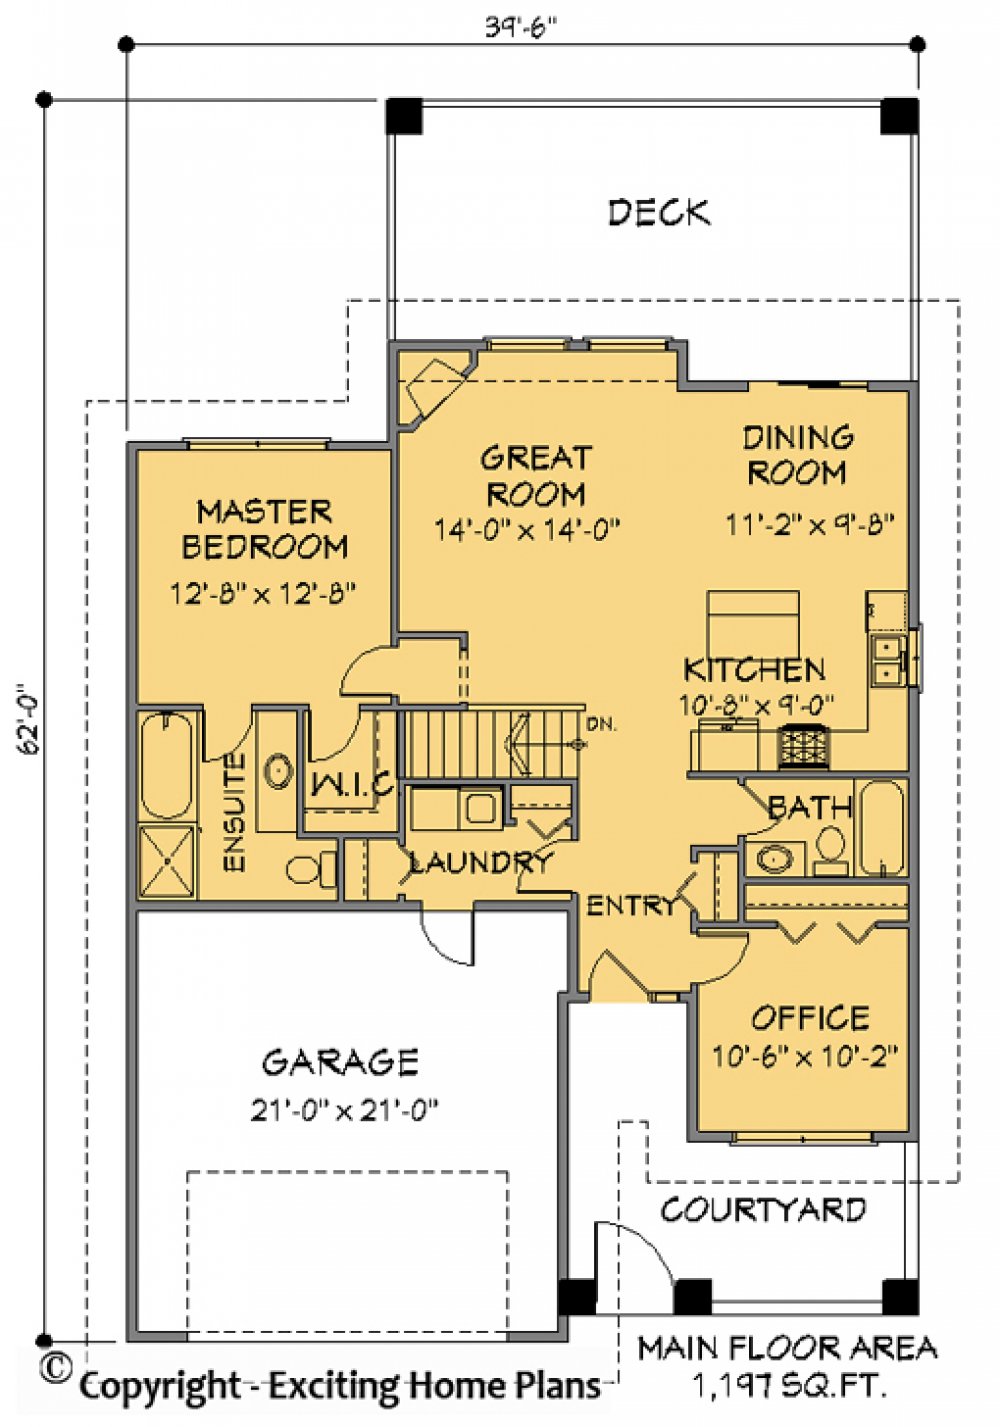 House Plan E1136-10 Main Floor Plan